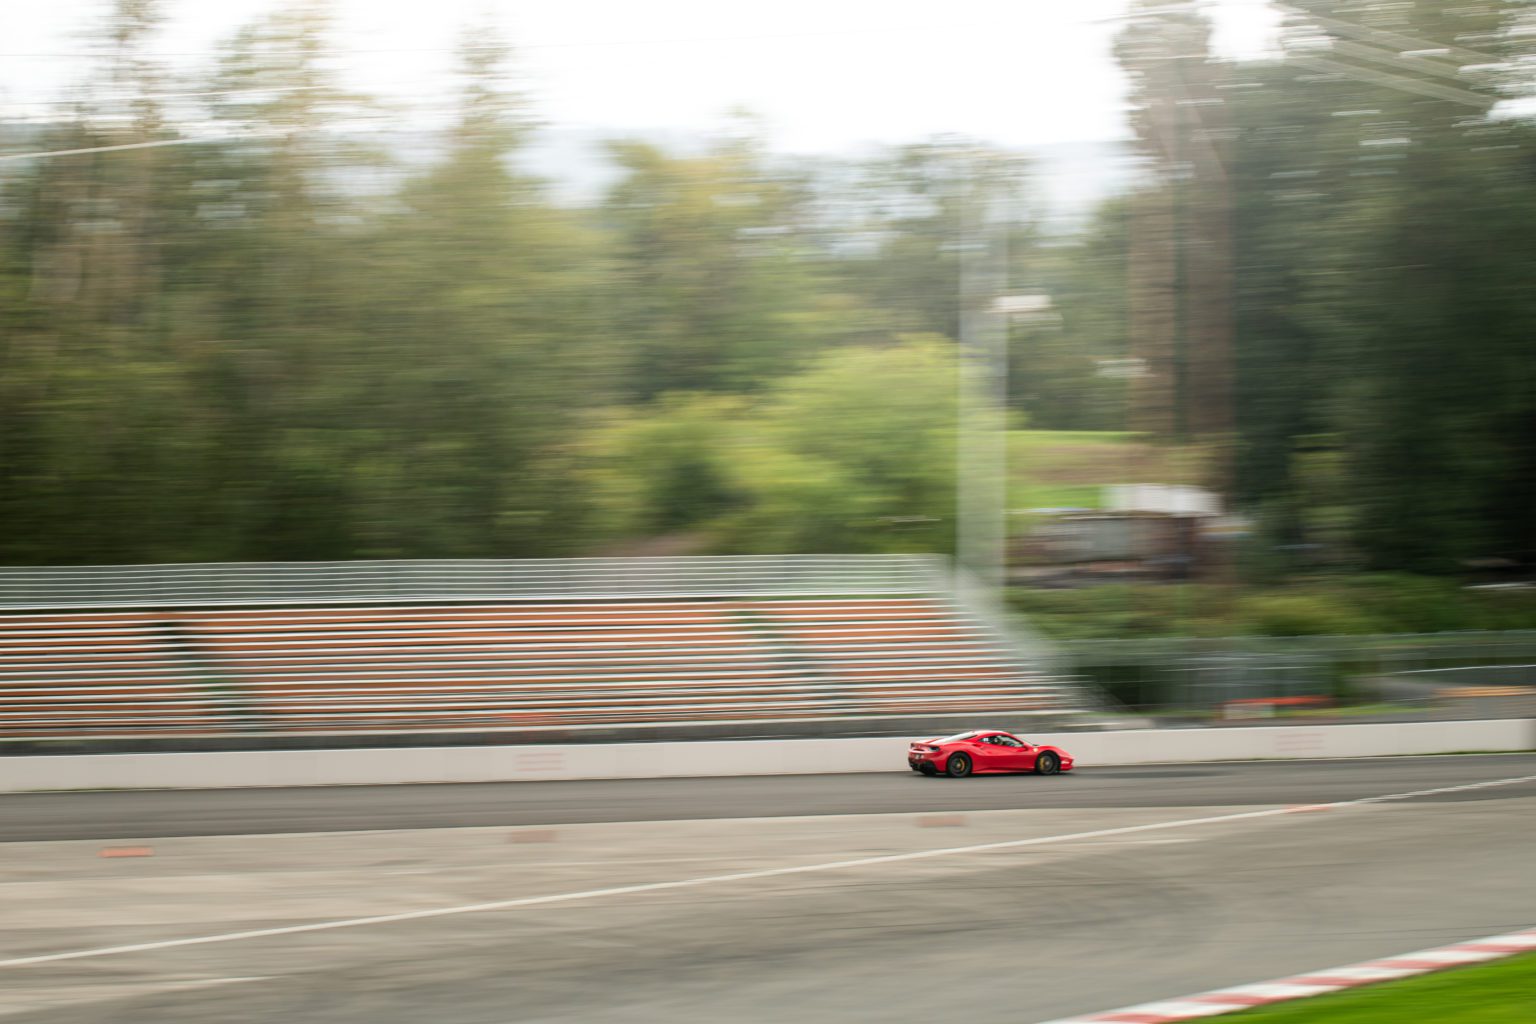 Xtreme Xperience's Ferrari 488 GTB driving on a racetrack. 